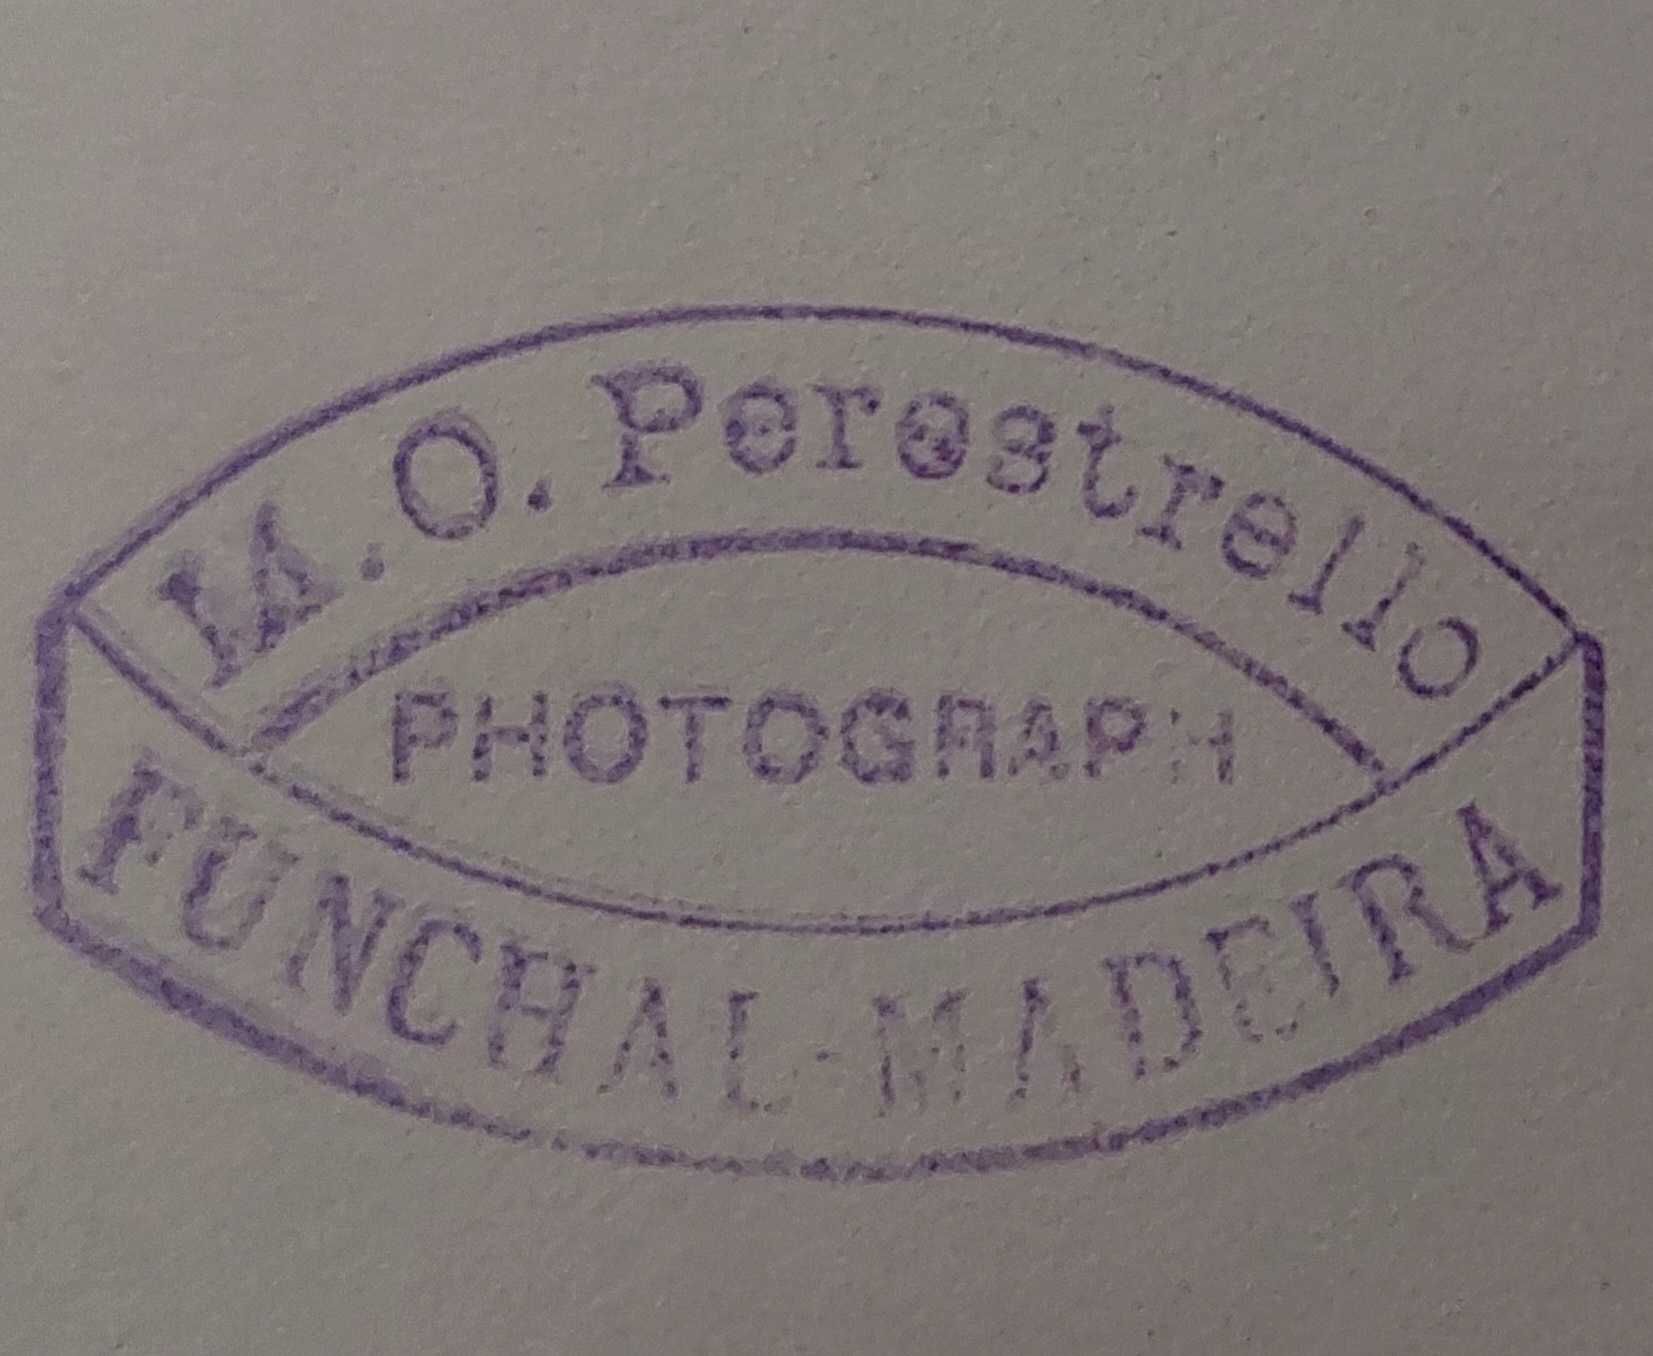 Funchal Foto madeira. Perestrelos borracha, 1900